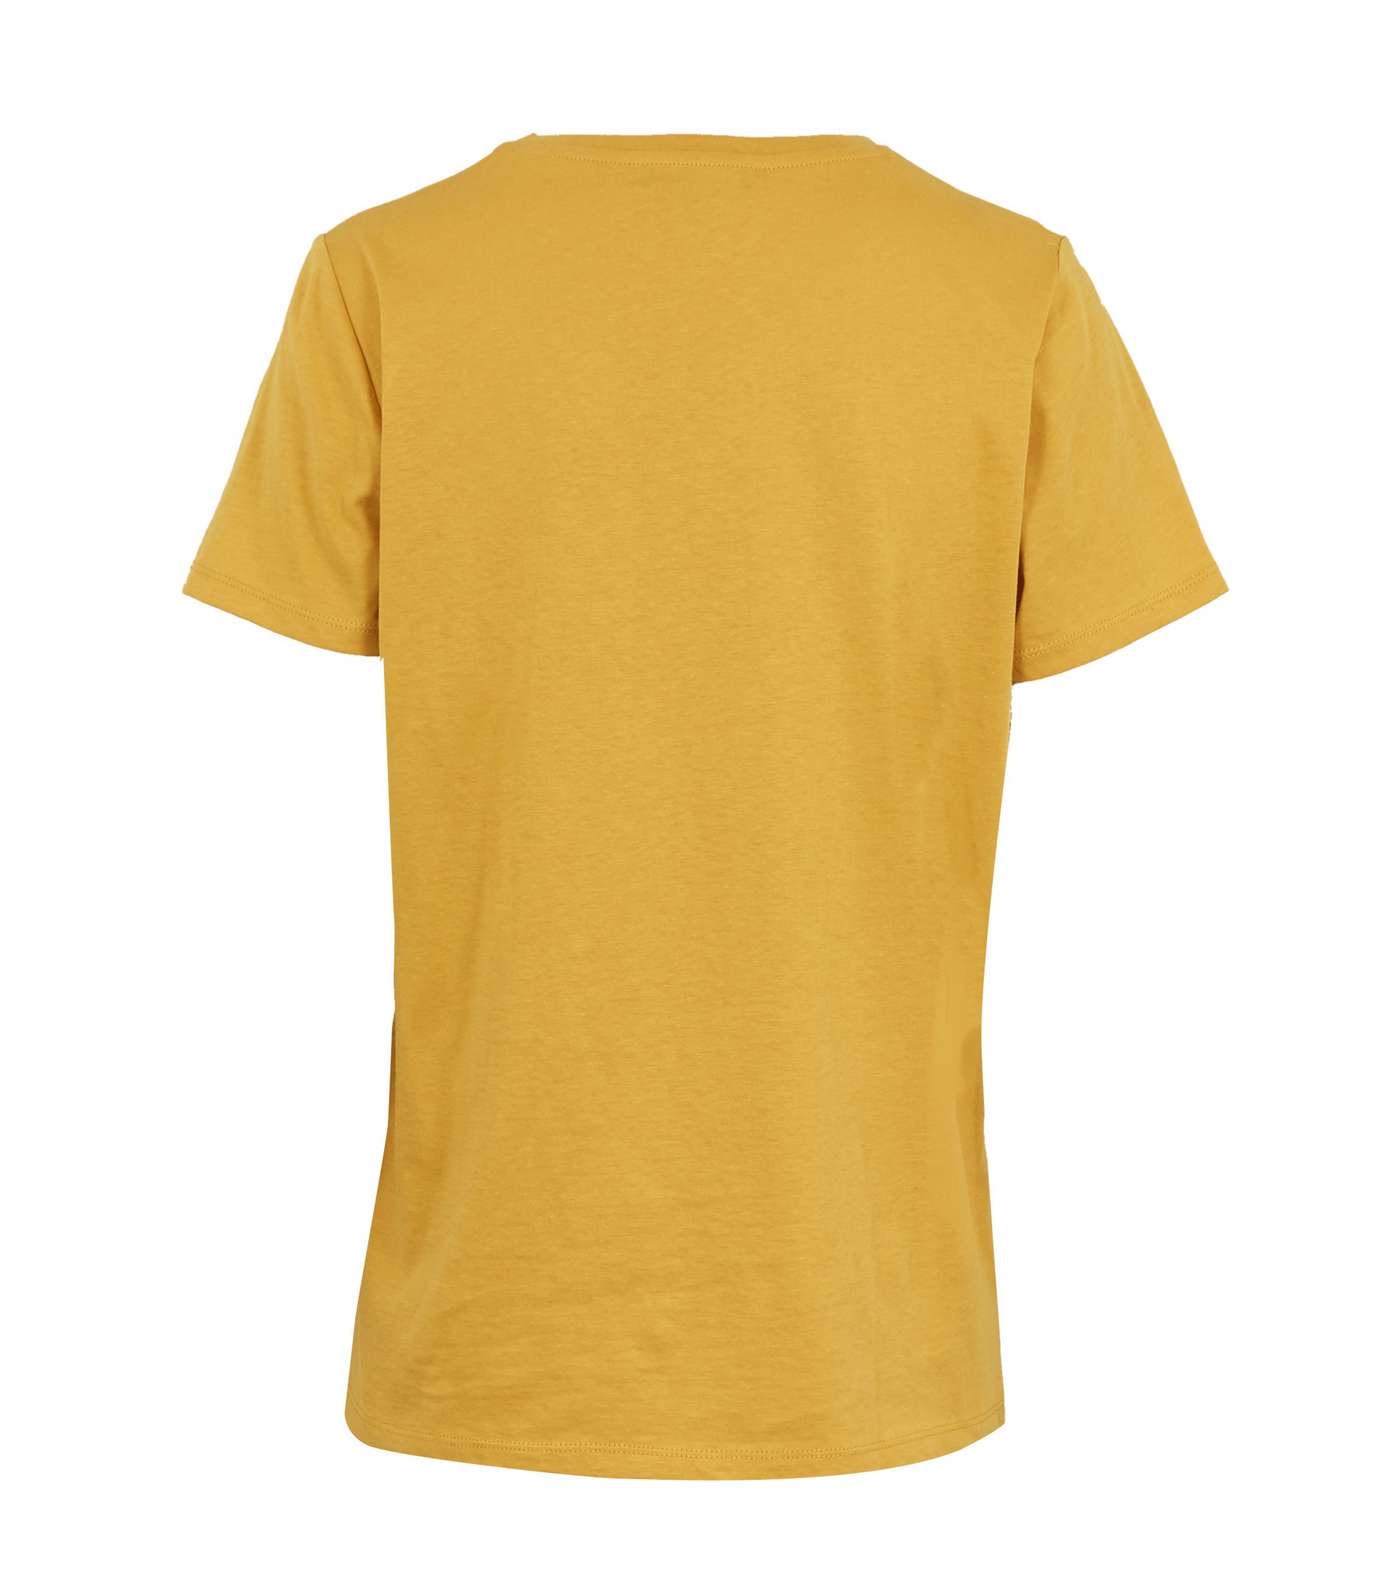 Mustard Sweeter Than Honey Slogan T-Shirt Image 2